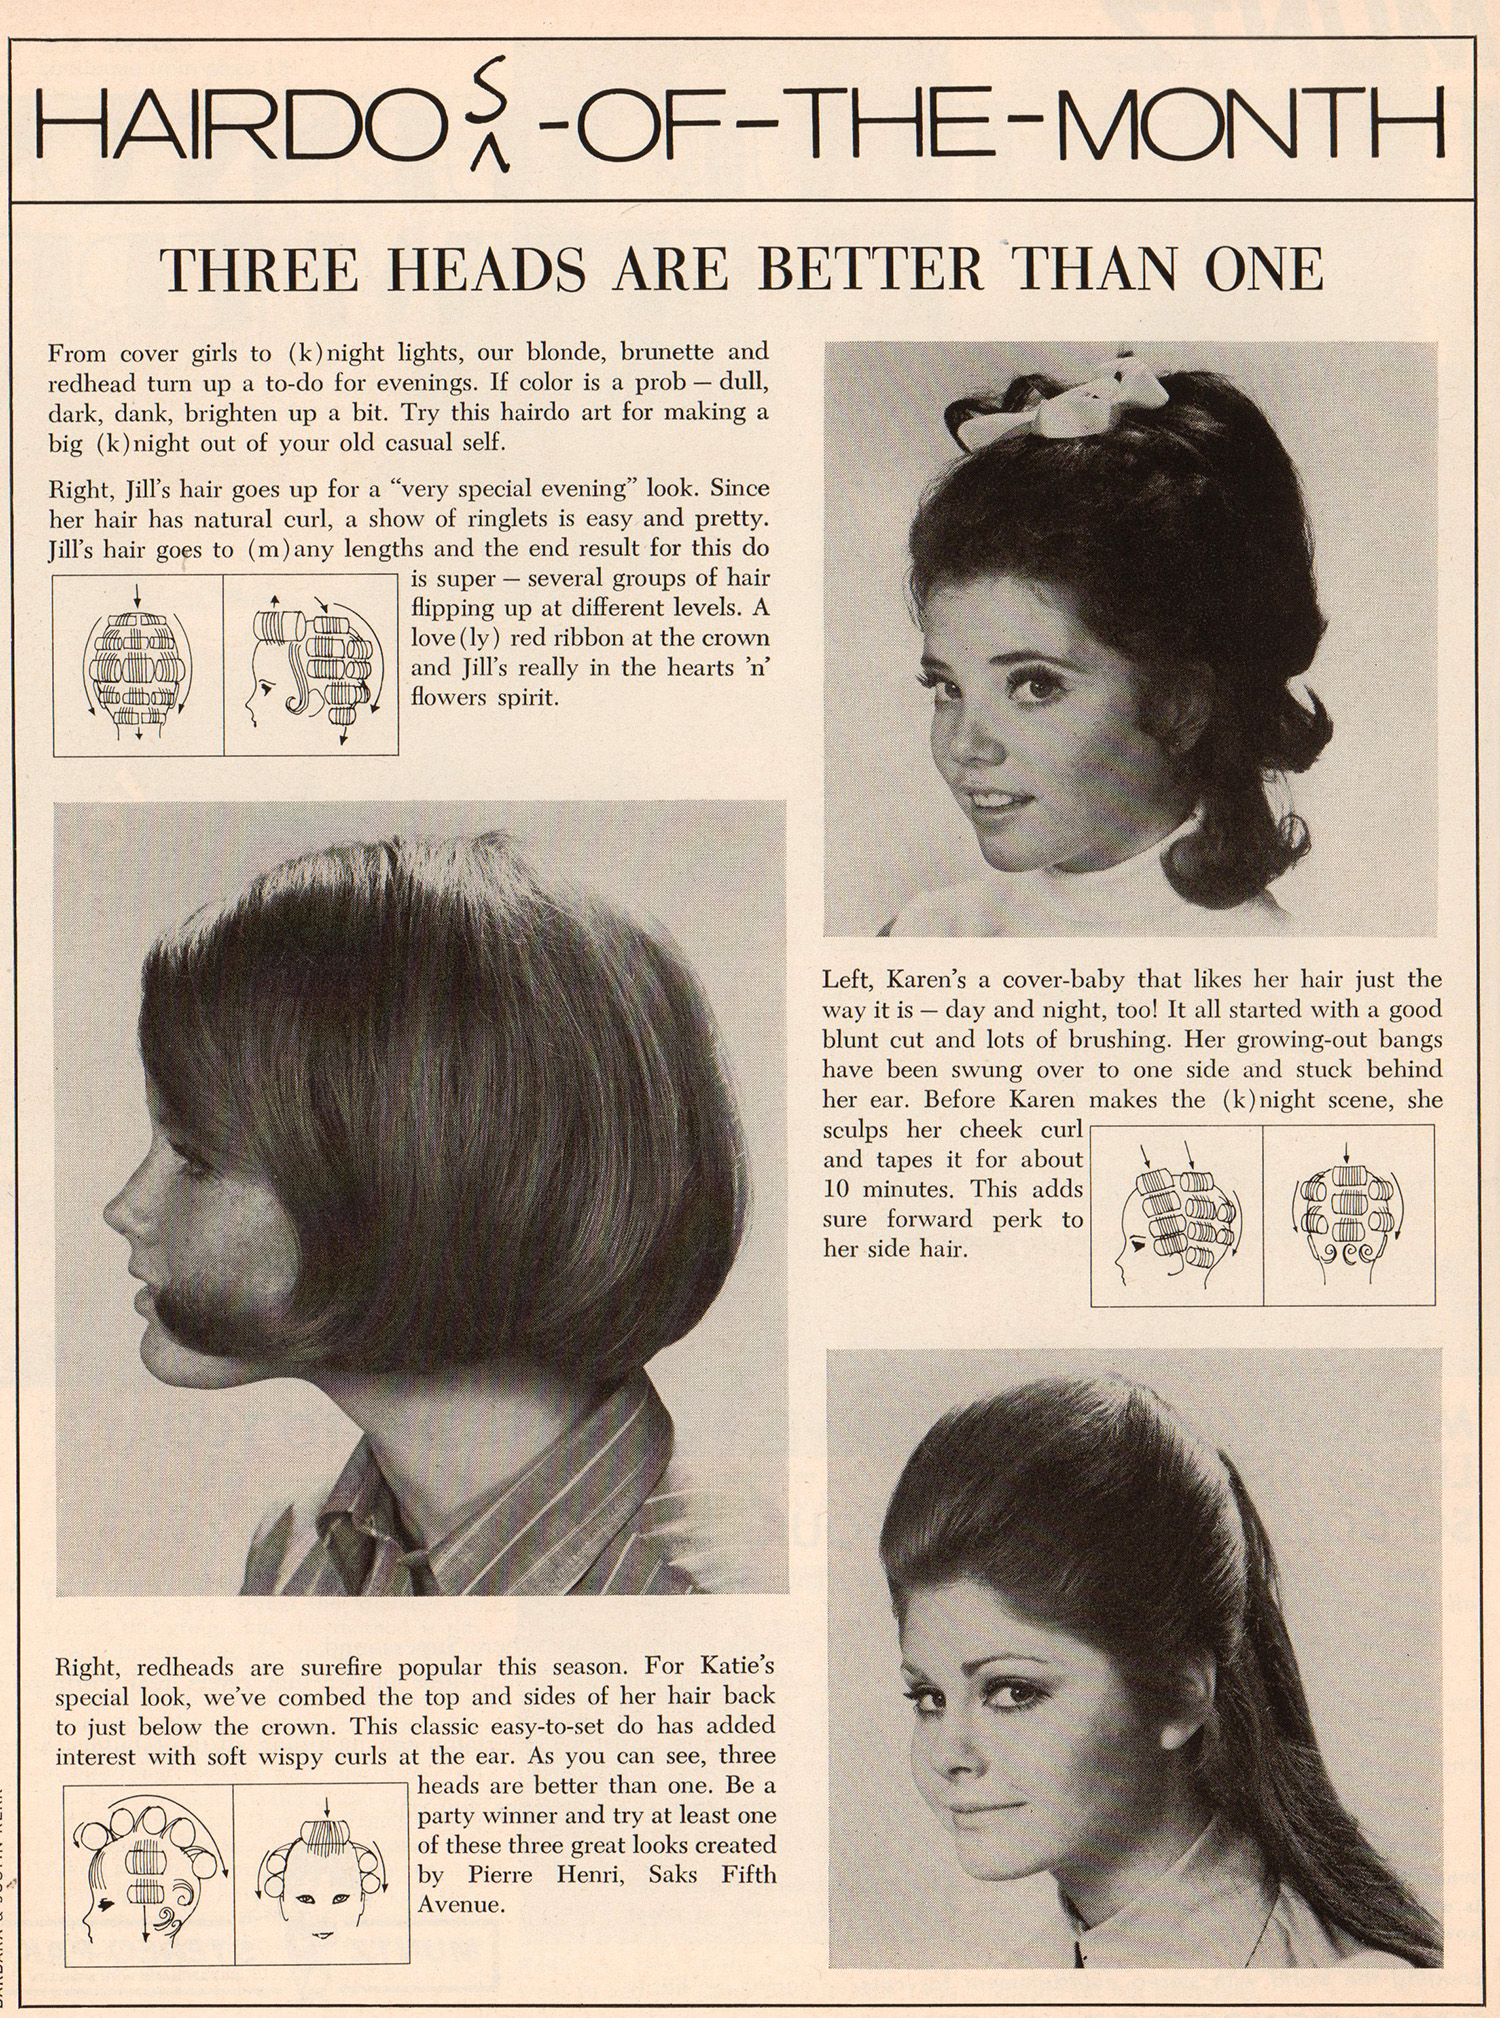 1968 hair styles